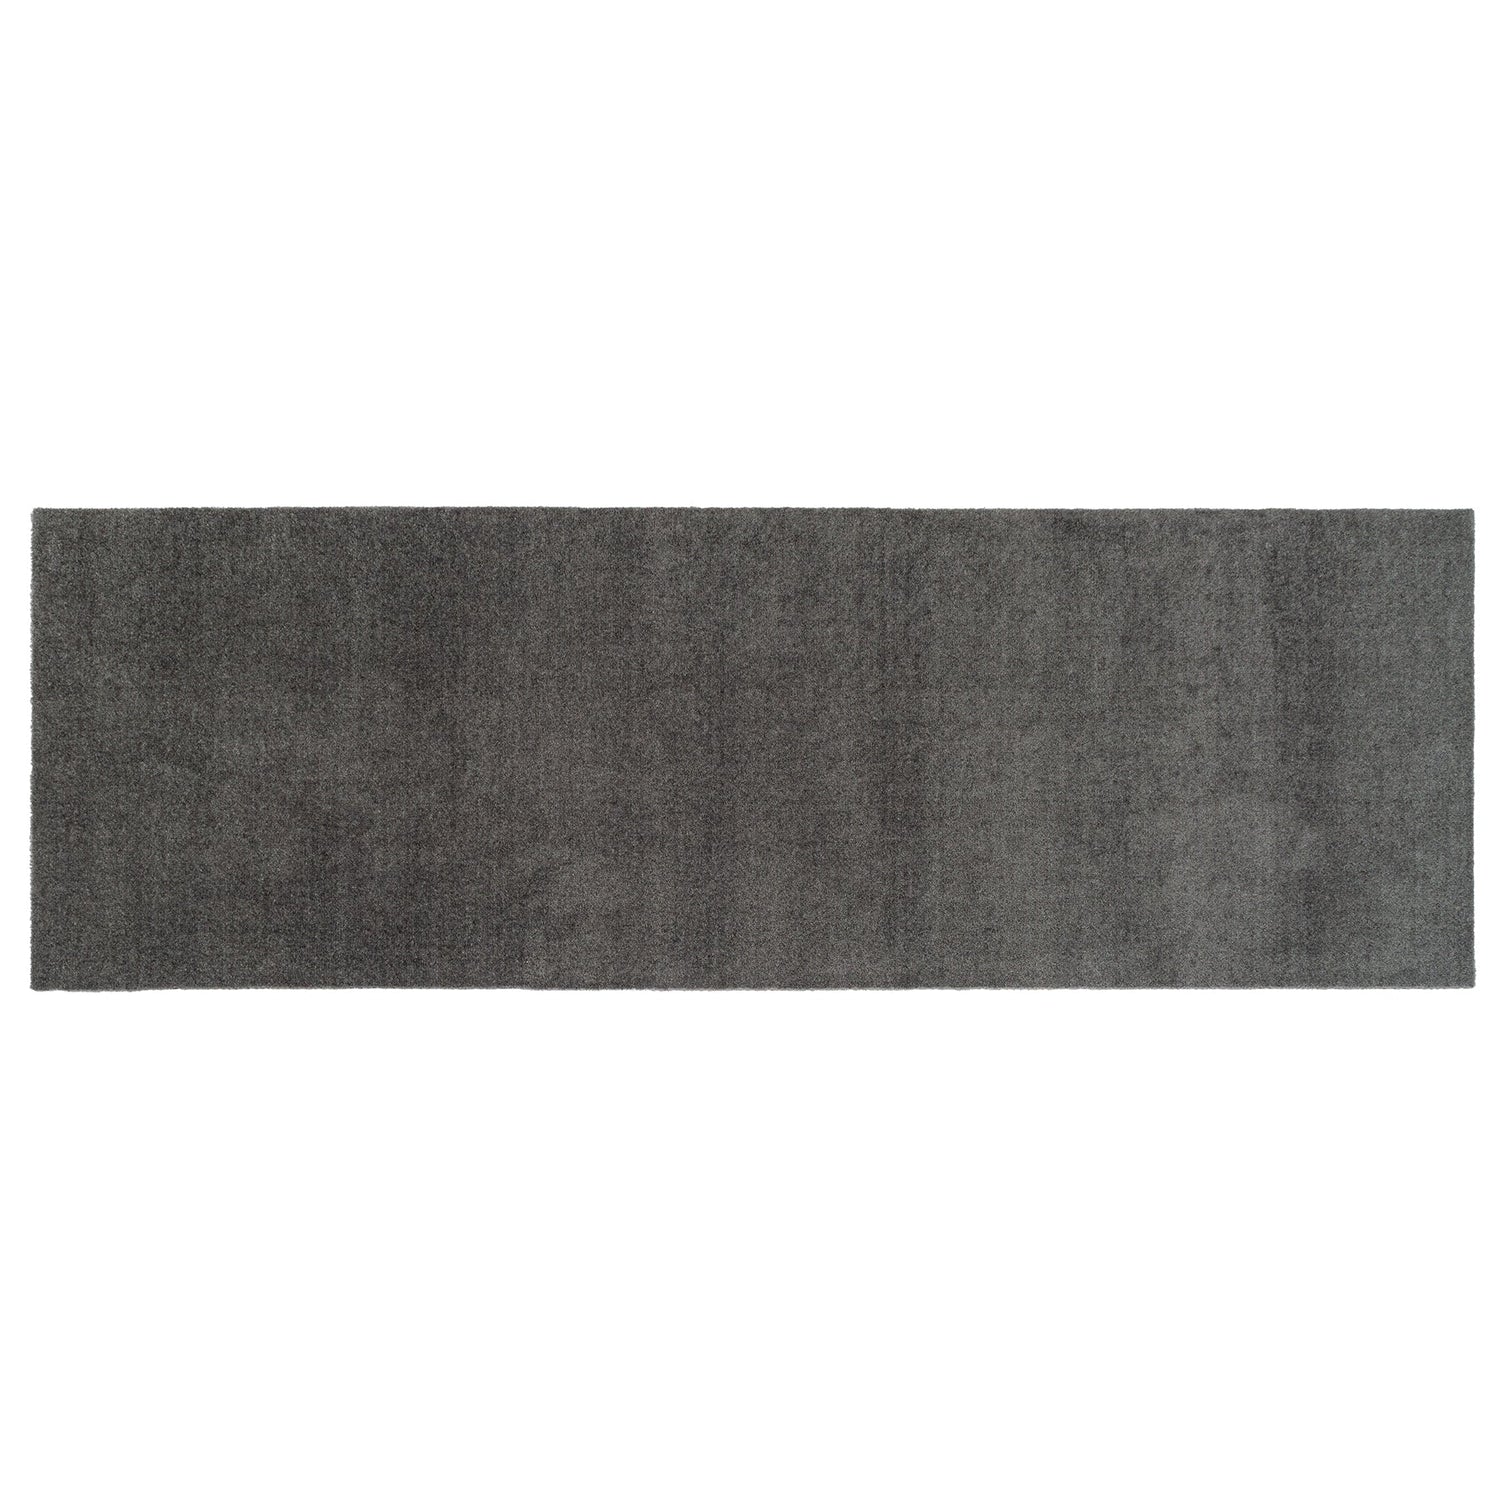 Blanket/had 67 x 200 cm - Uni Color/Gray